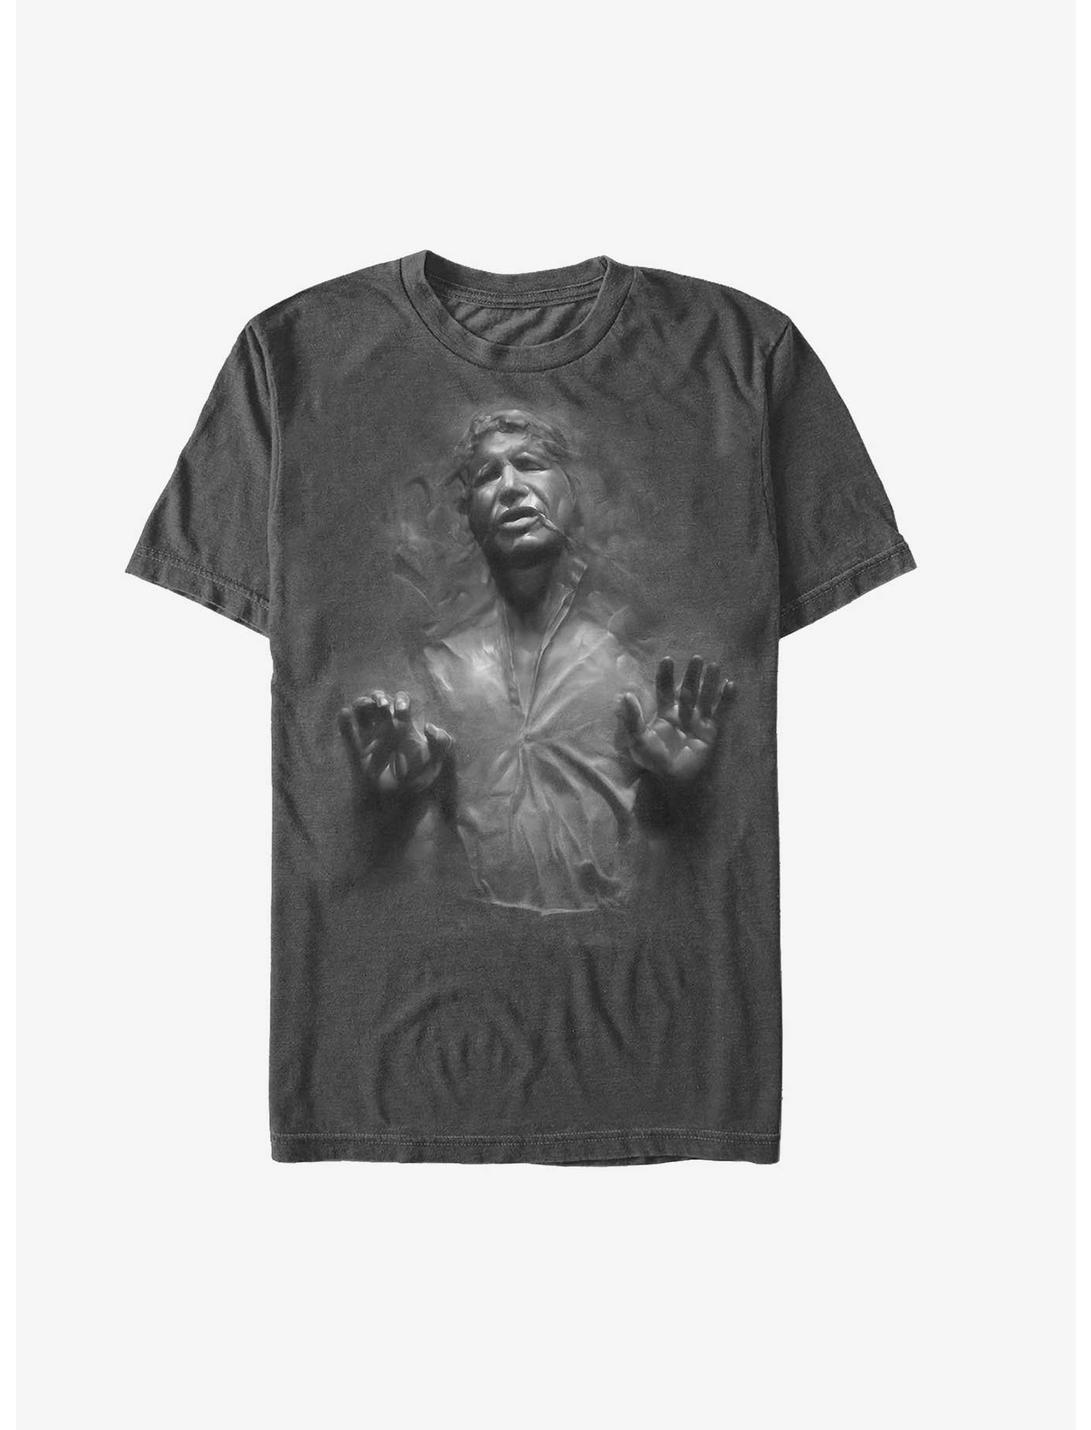 Star Wars Han Solo Carbonite Extra Soft T-Shirt, CHARCOAL, hi-res